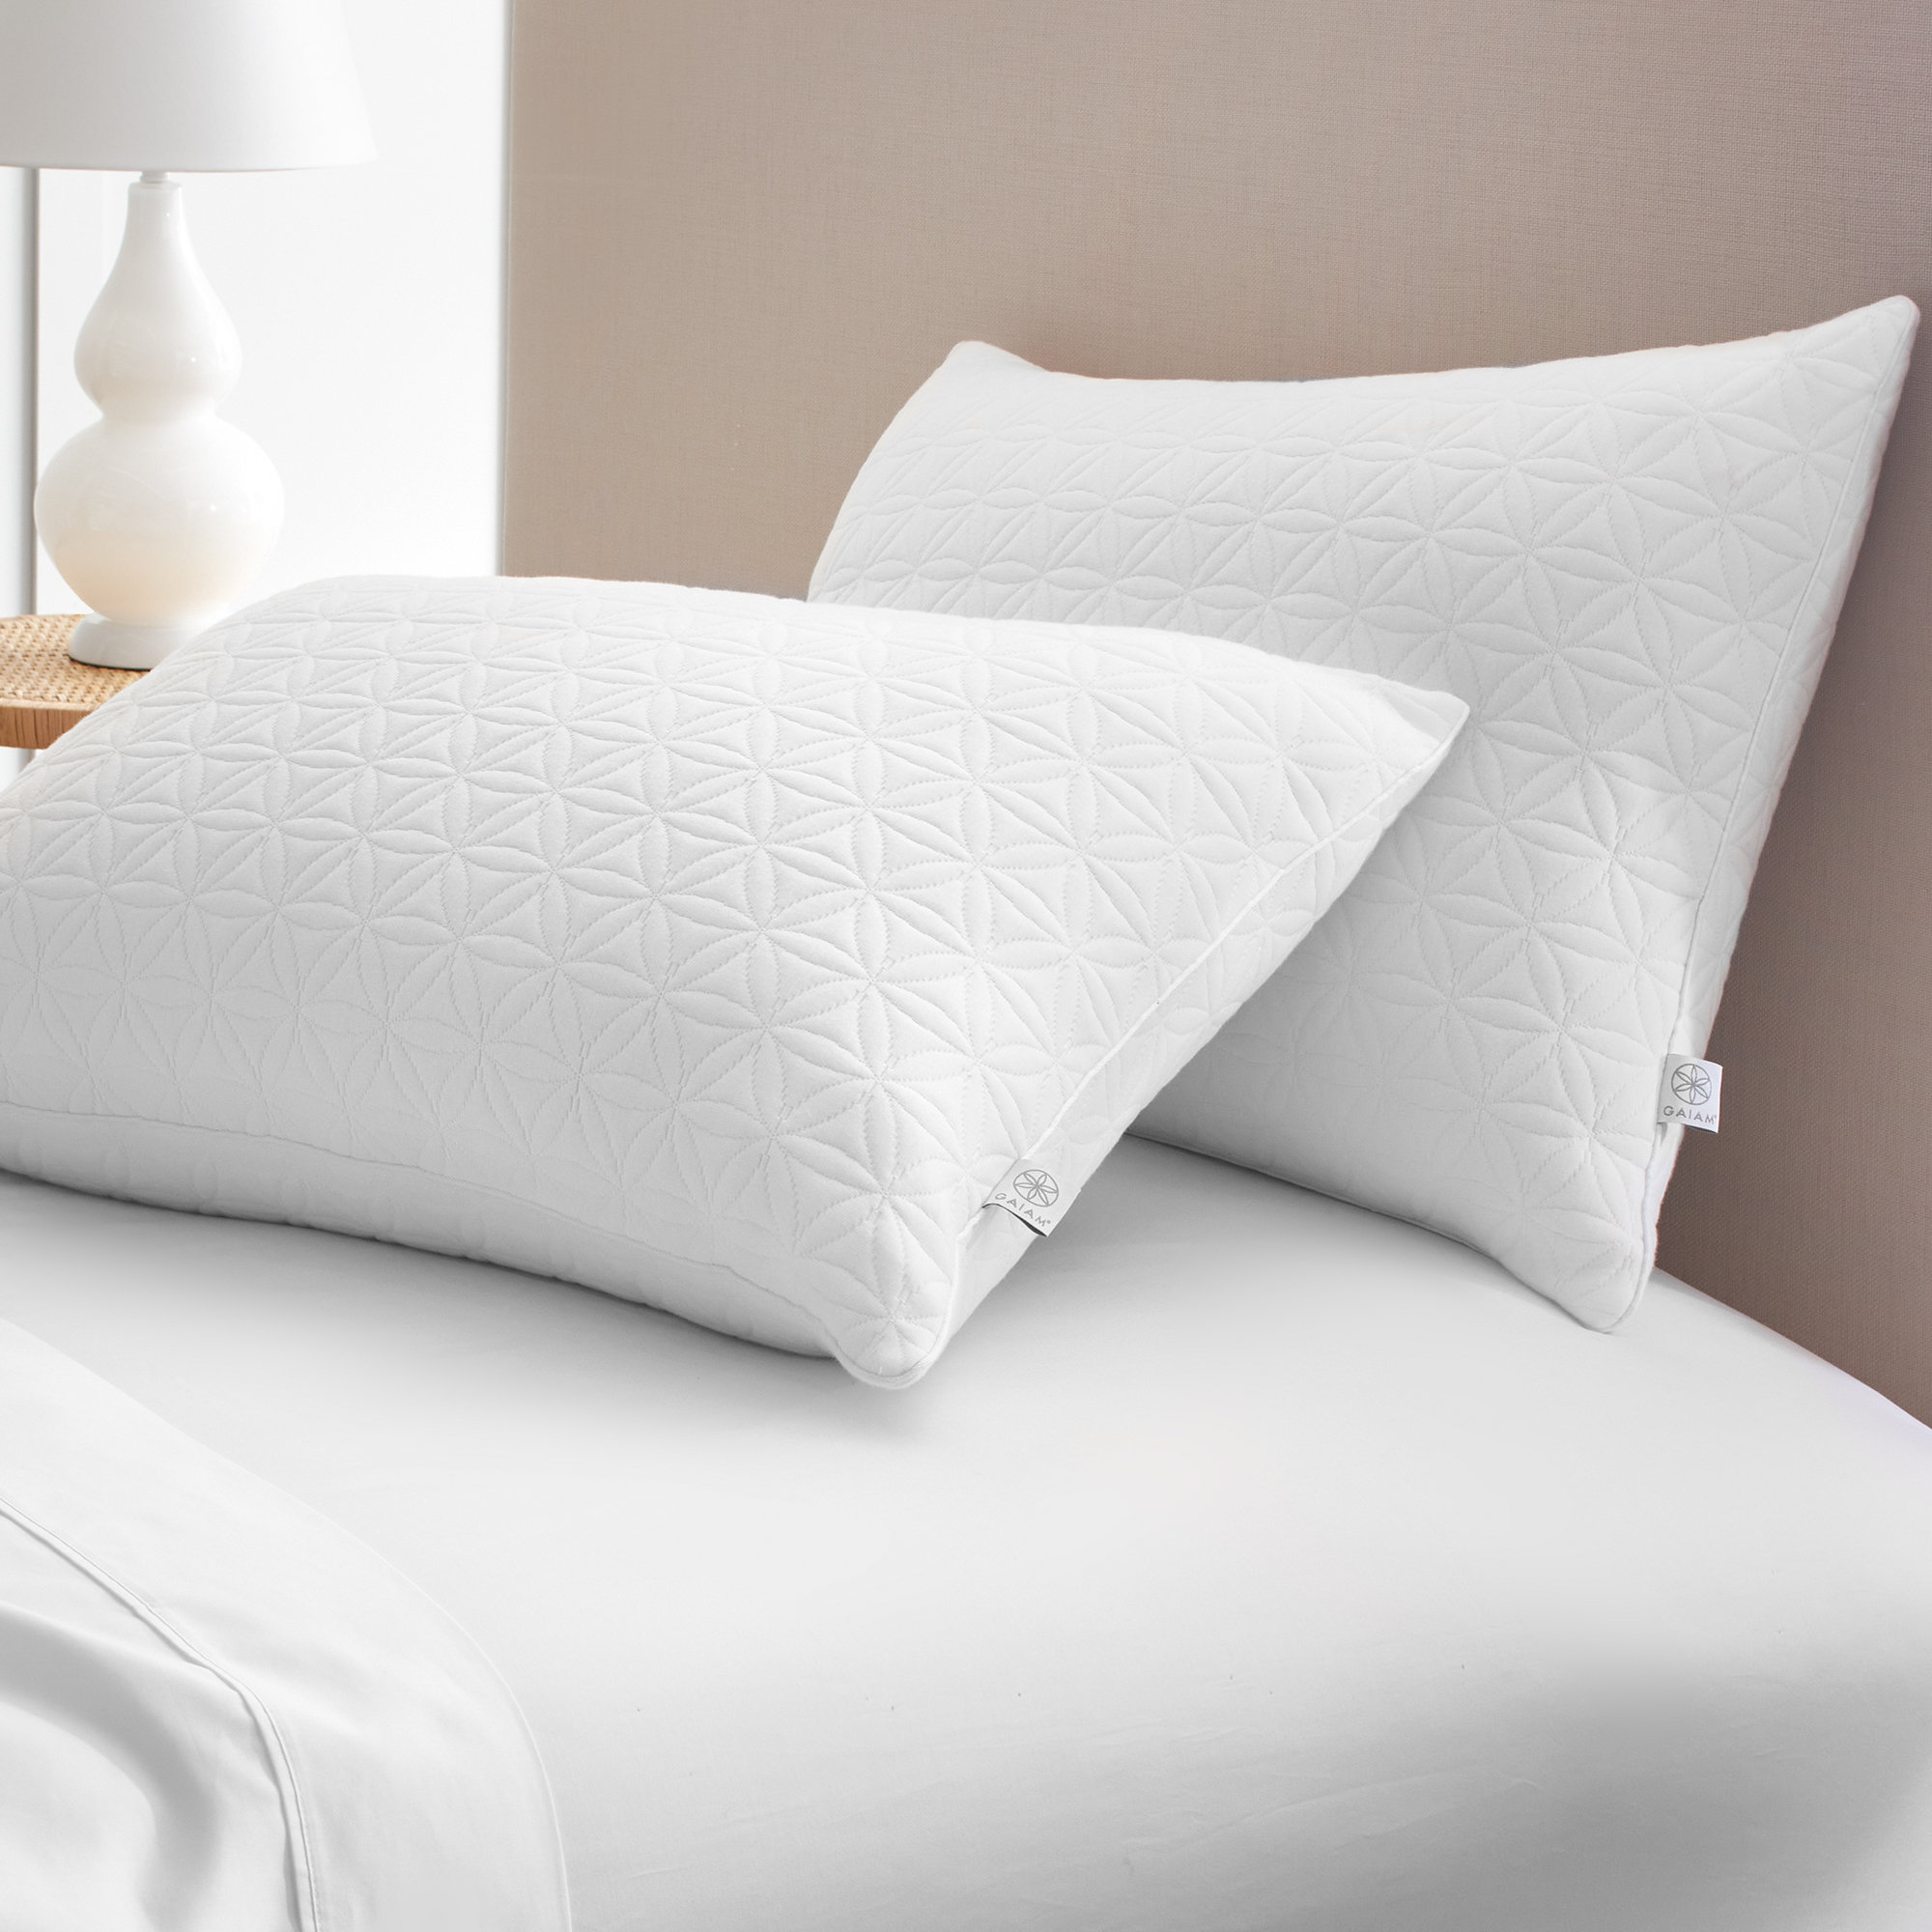 Ella Jayne Soft Down Alternative King Pillows, Set of 4, White